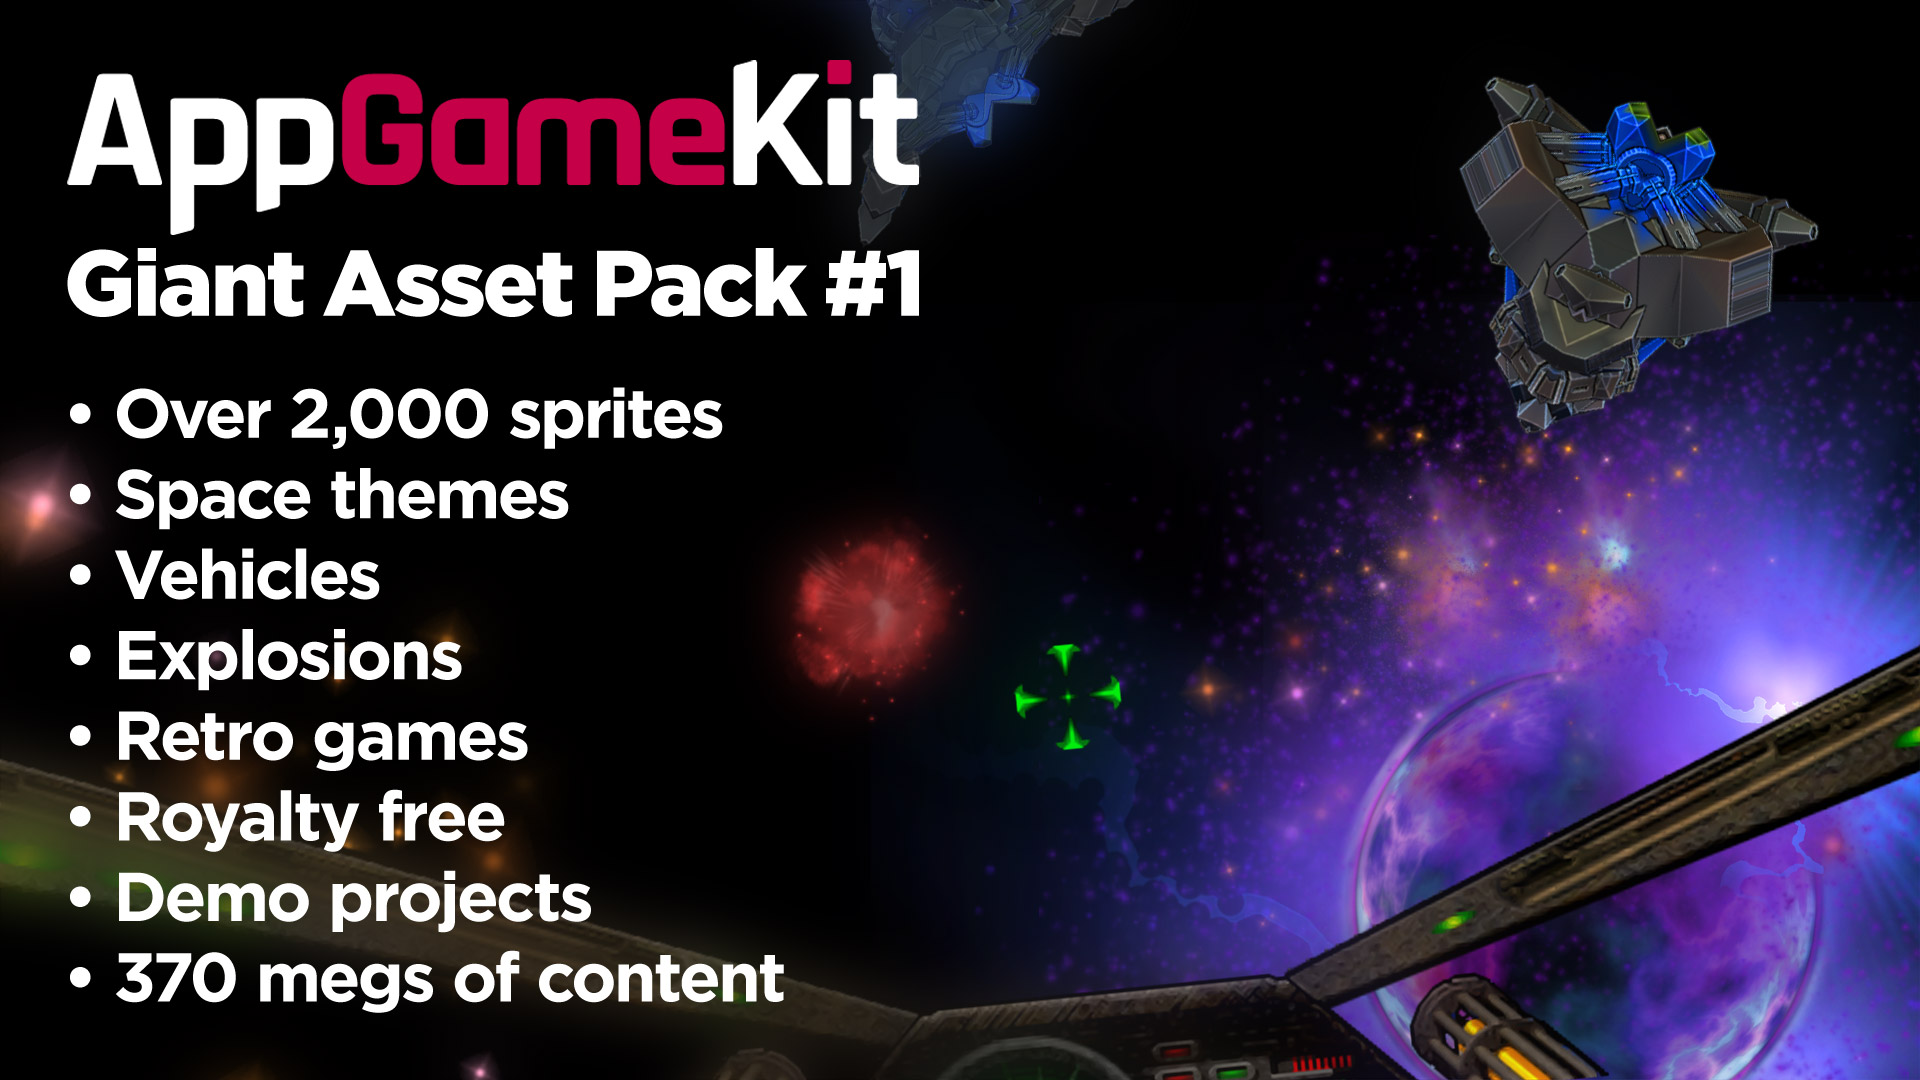 AppGameKit Classic - Giant Asset Pack 1 Featured Screenshot #1